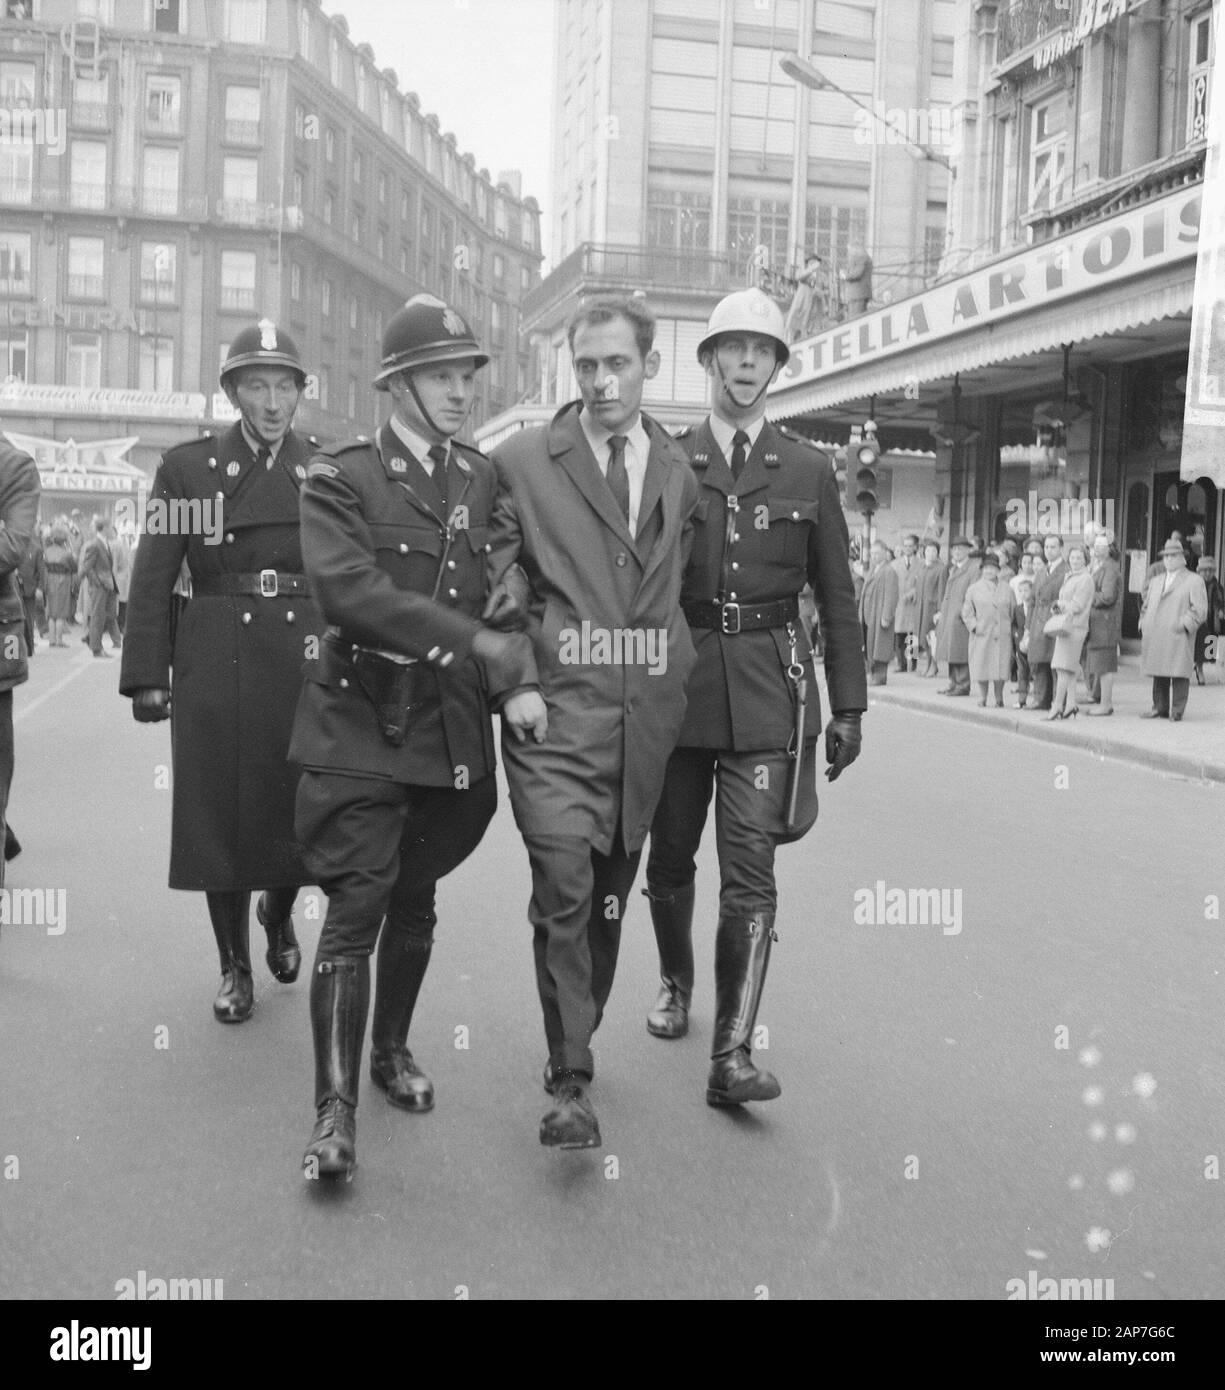 Demonstration in Brussels. Police brings arrests on Date: 22 October 1961 Location: Brussels Keywords: POLICE, arrests, demonstrations Stock Photo